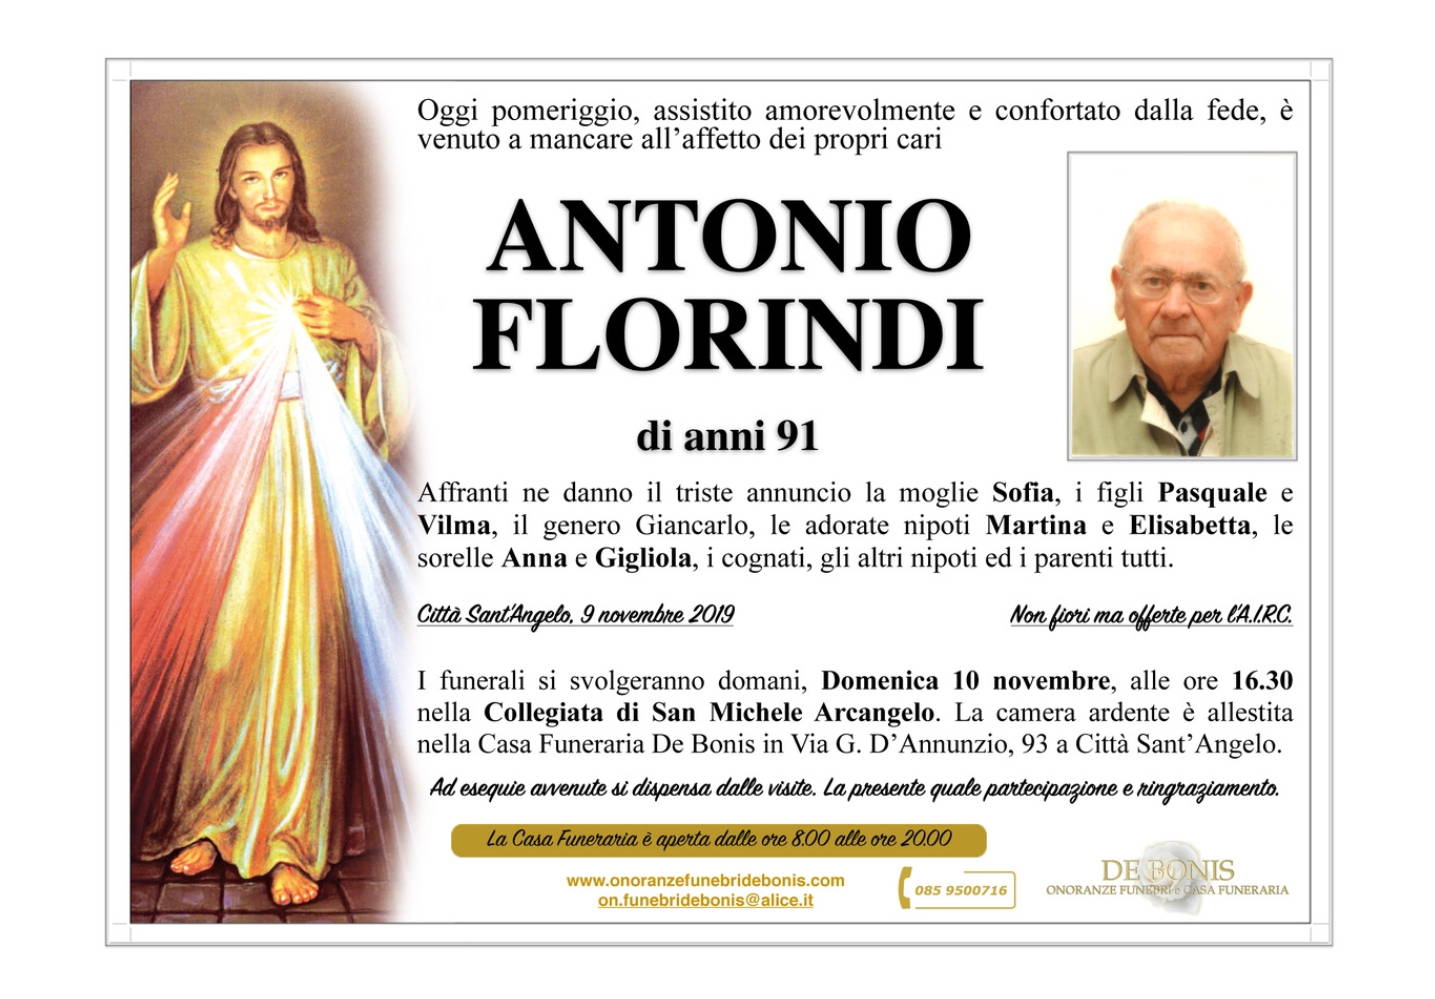 Antonio Florindi